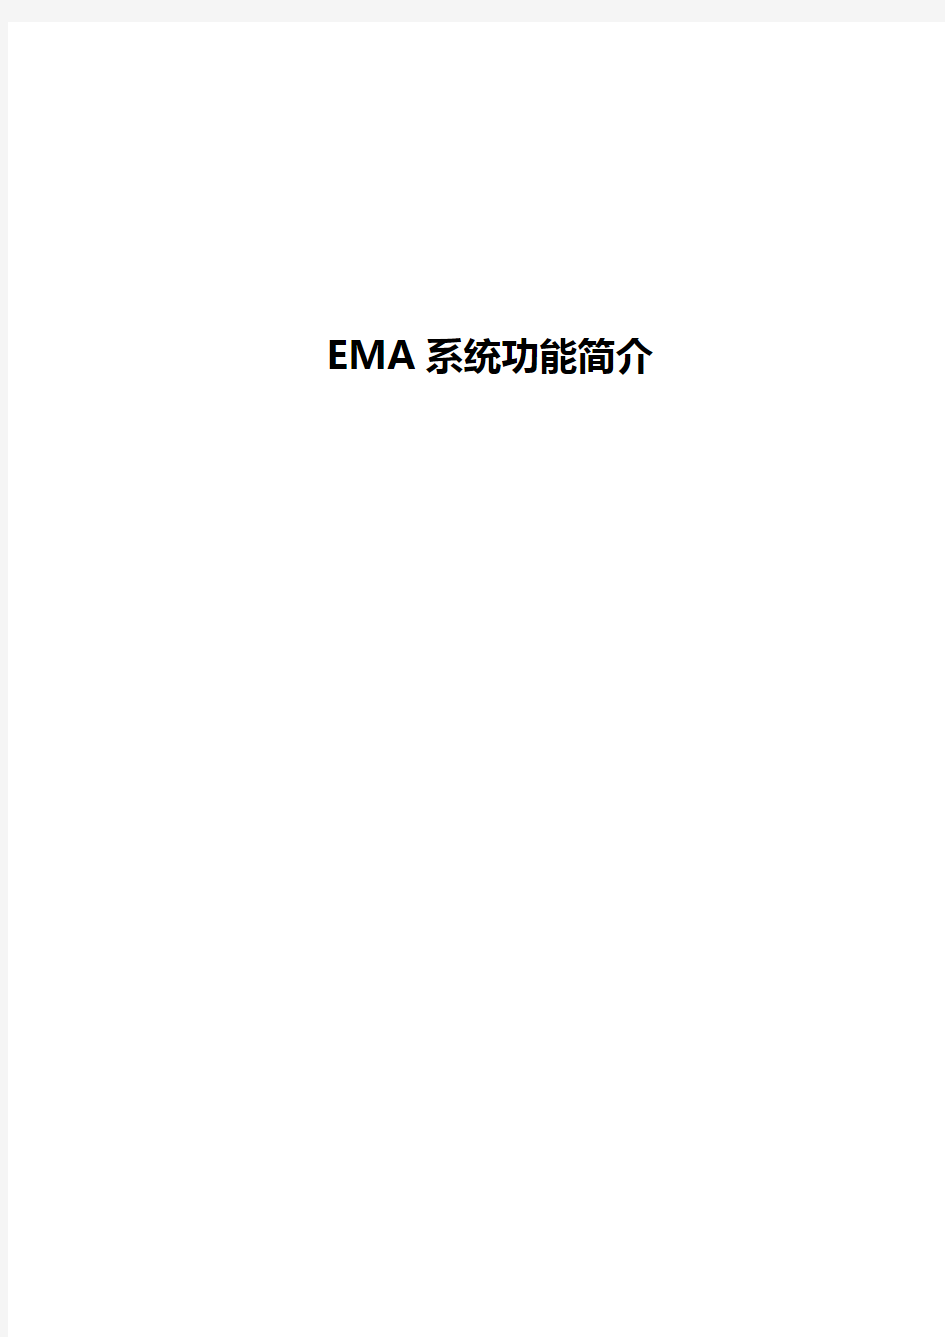 EMA系统功能概述